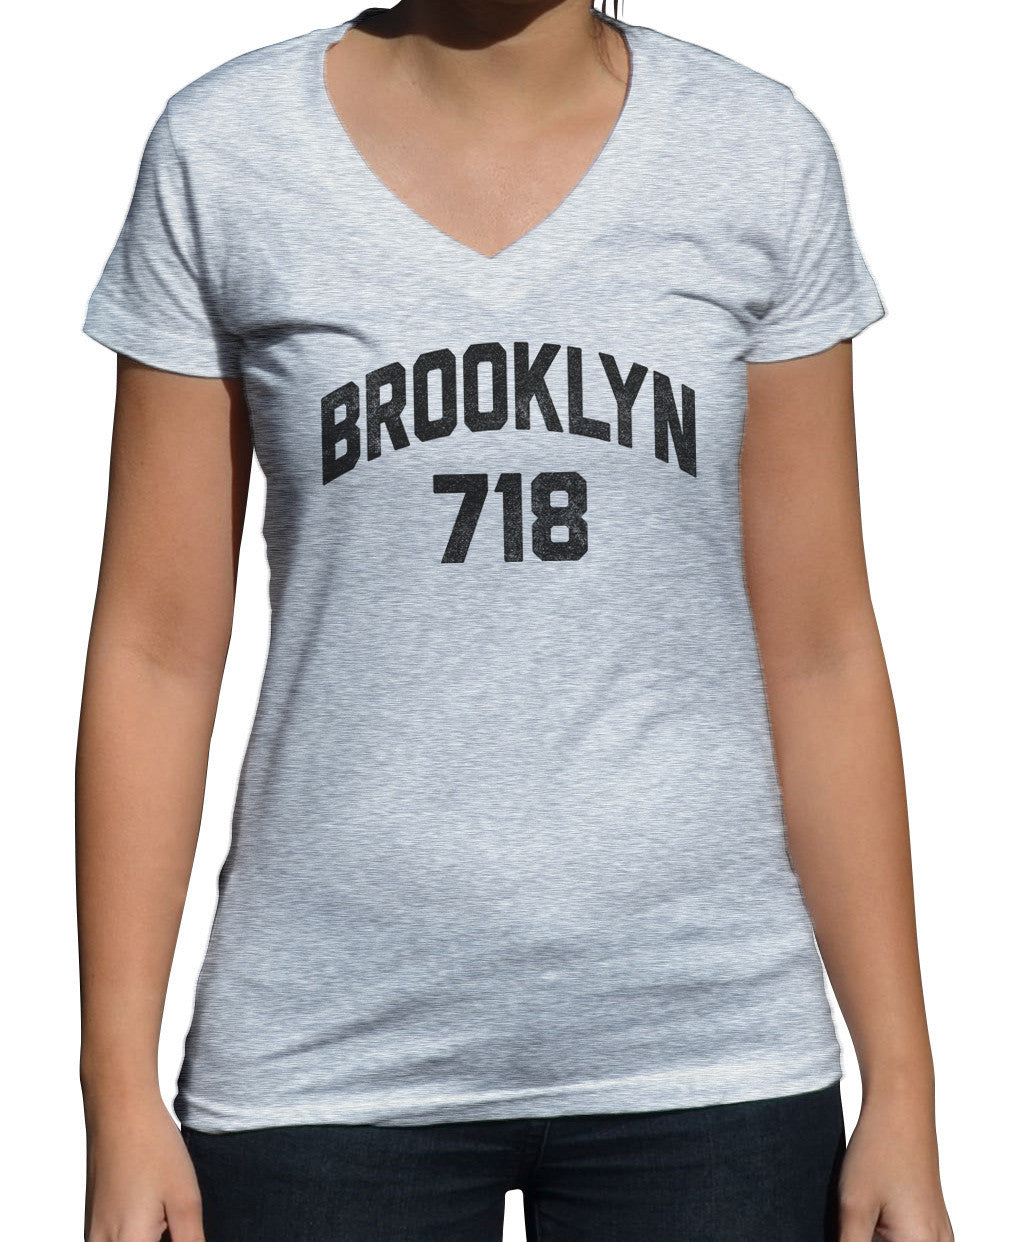 Women's Brooklyn 718 Area Code Vneck T-Shirt